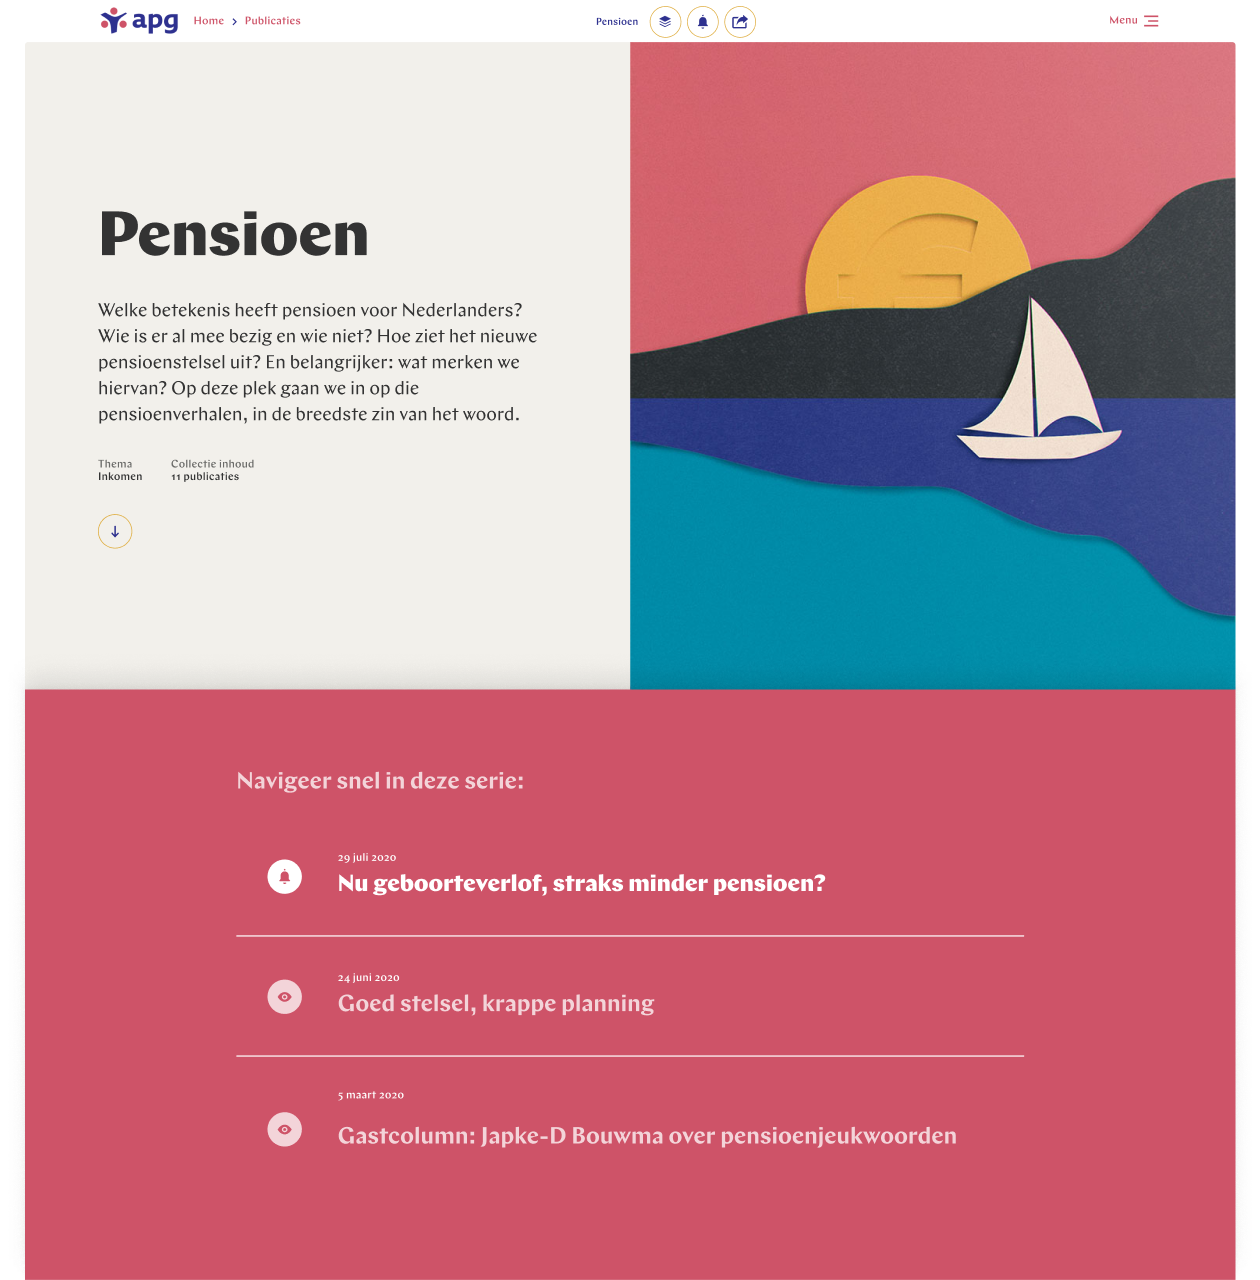 Pension page screenshot